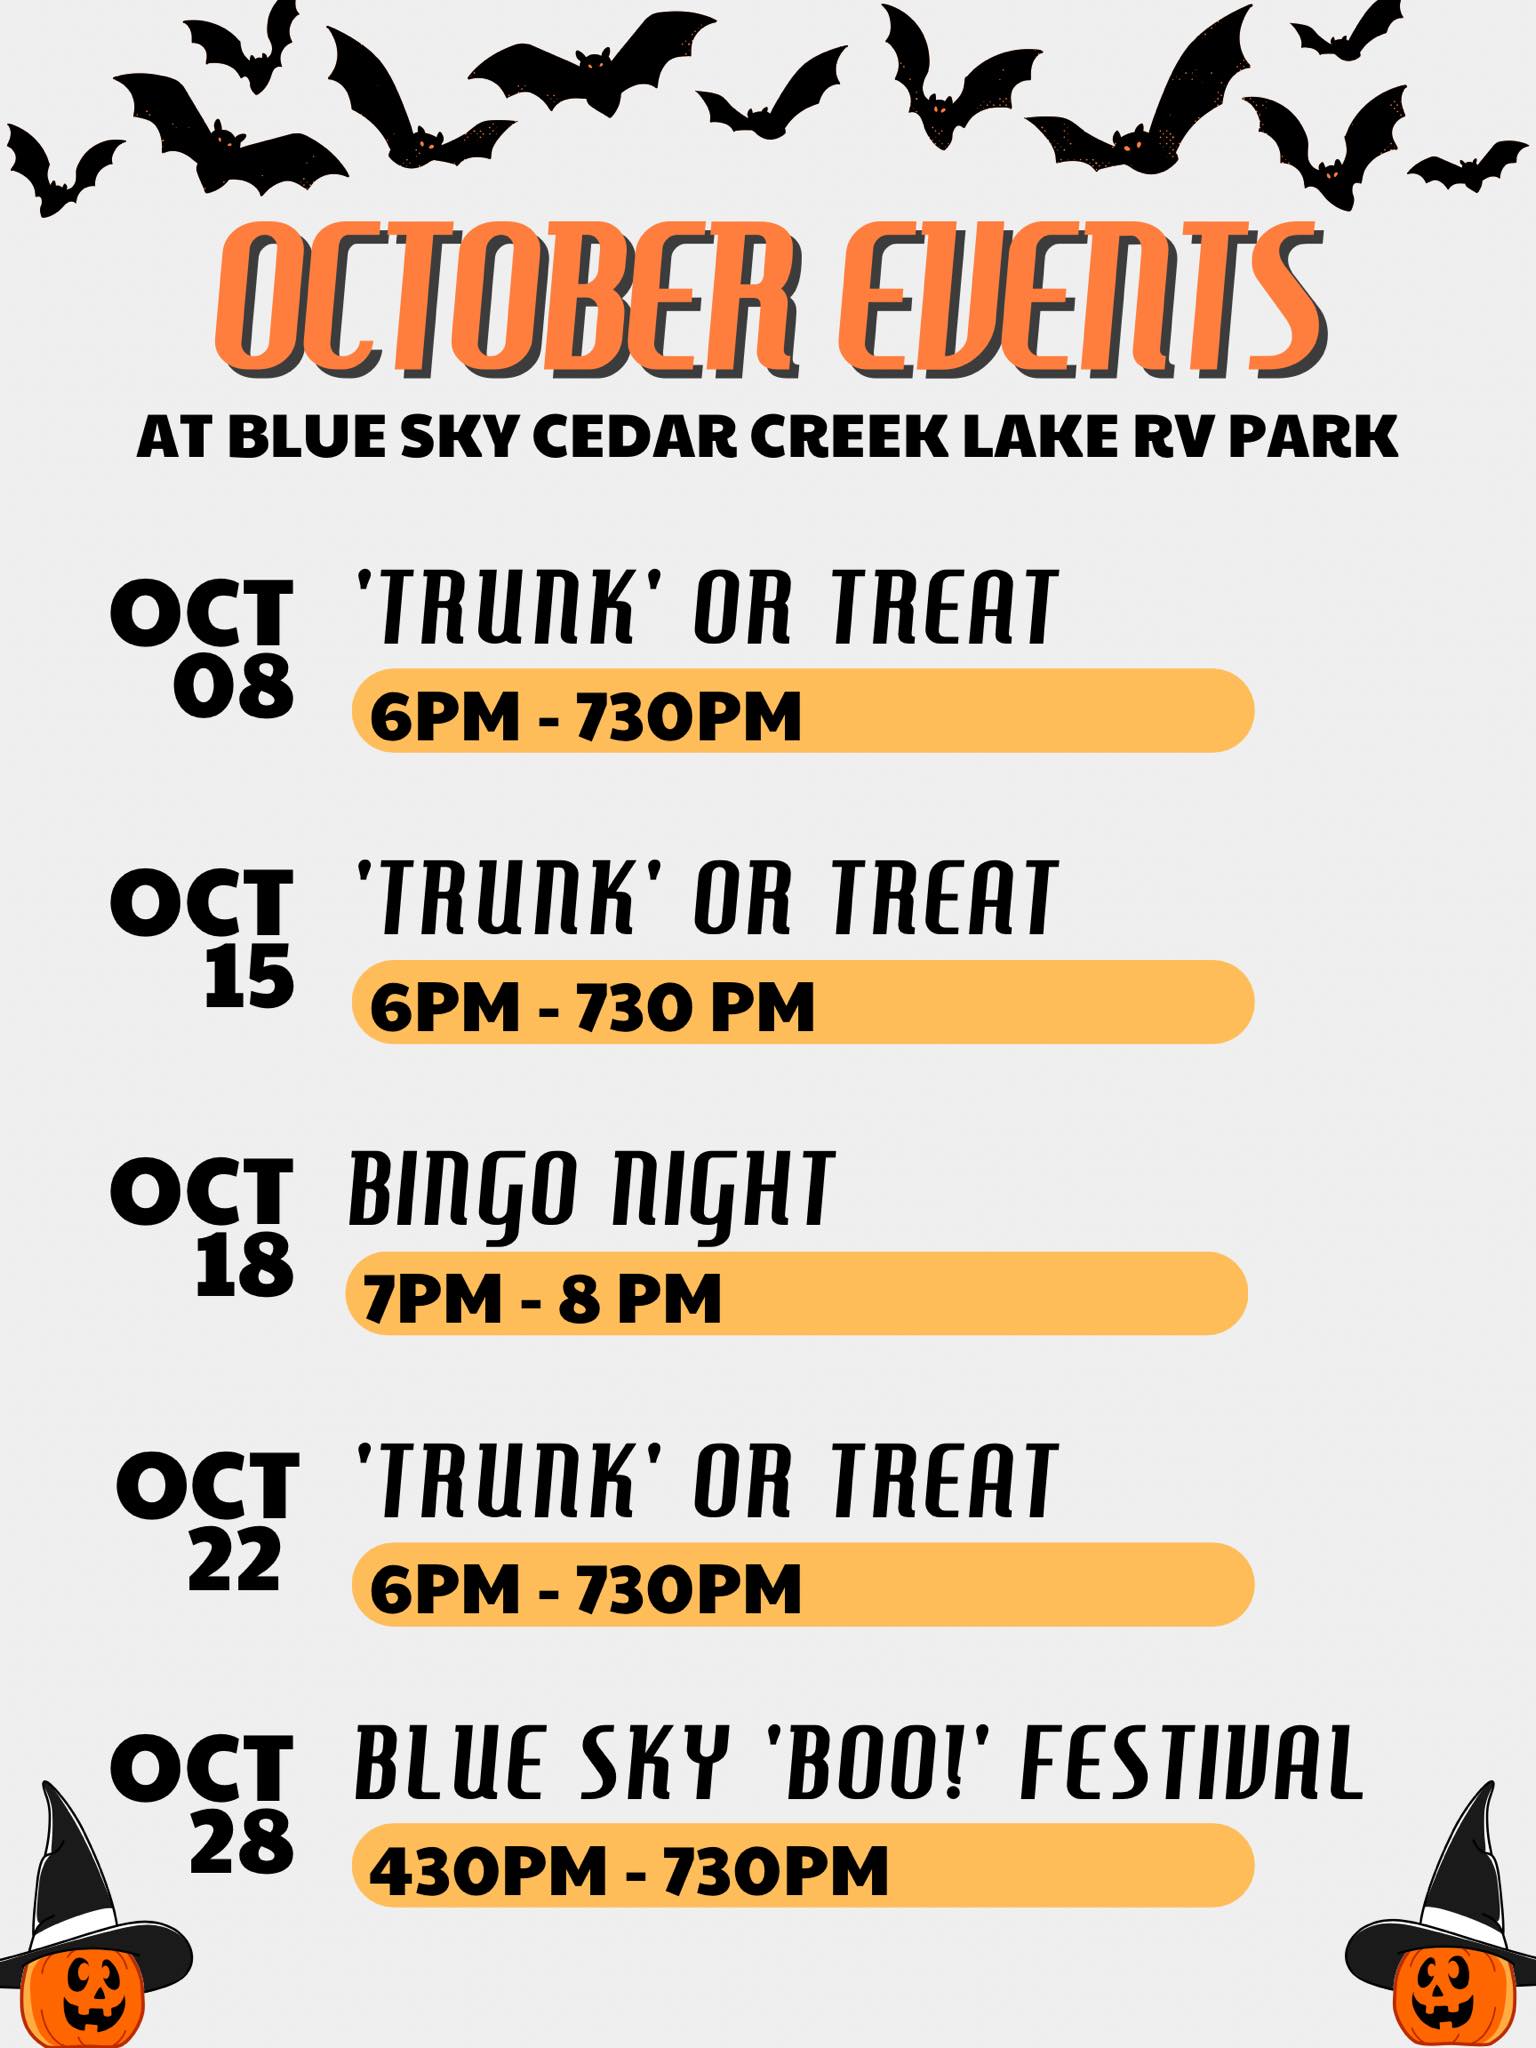 October Events At Blue Sky Cedar Creek Lake RV Park 1 October 22 2 CedarCreekLake.Online